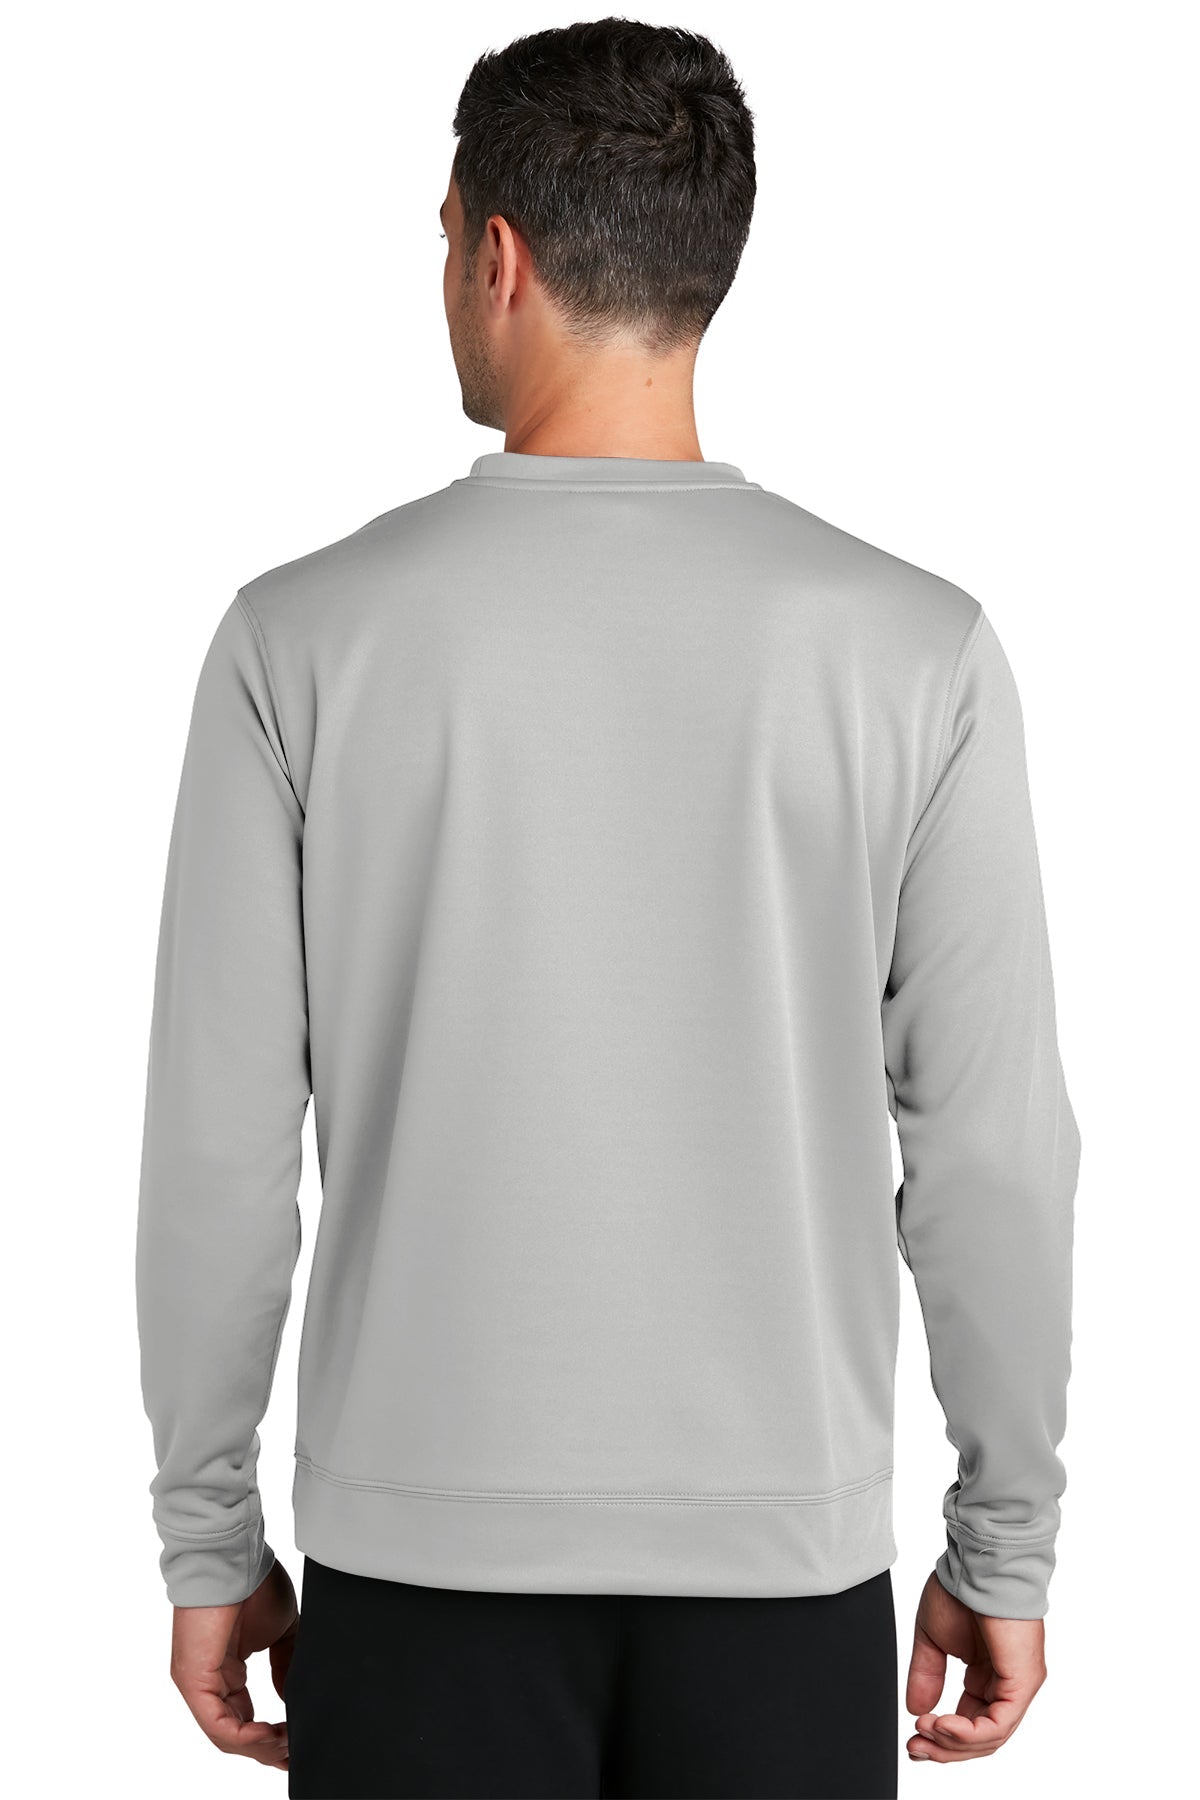 Port & Company Performance Fleece Branded Sweatshirts, Silver